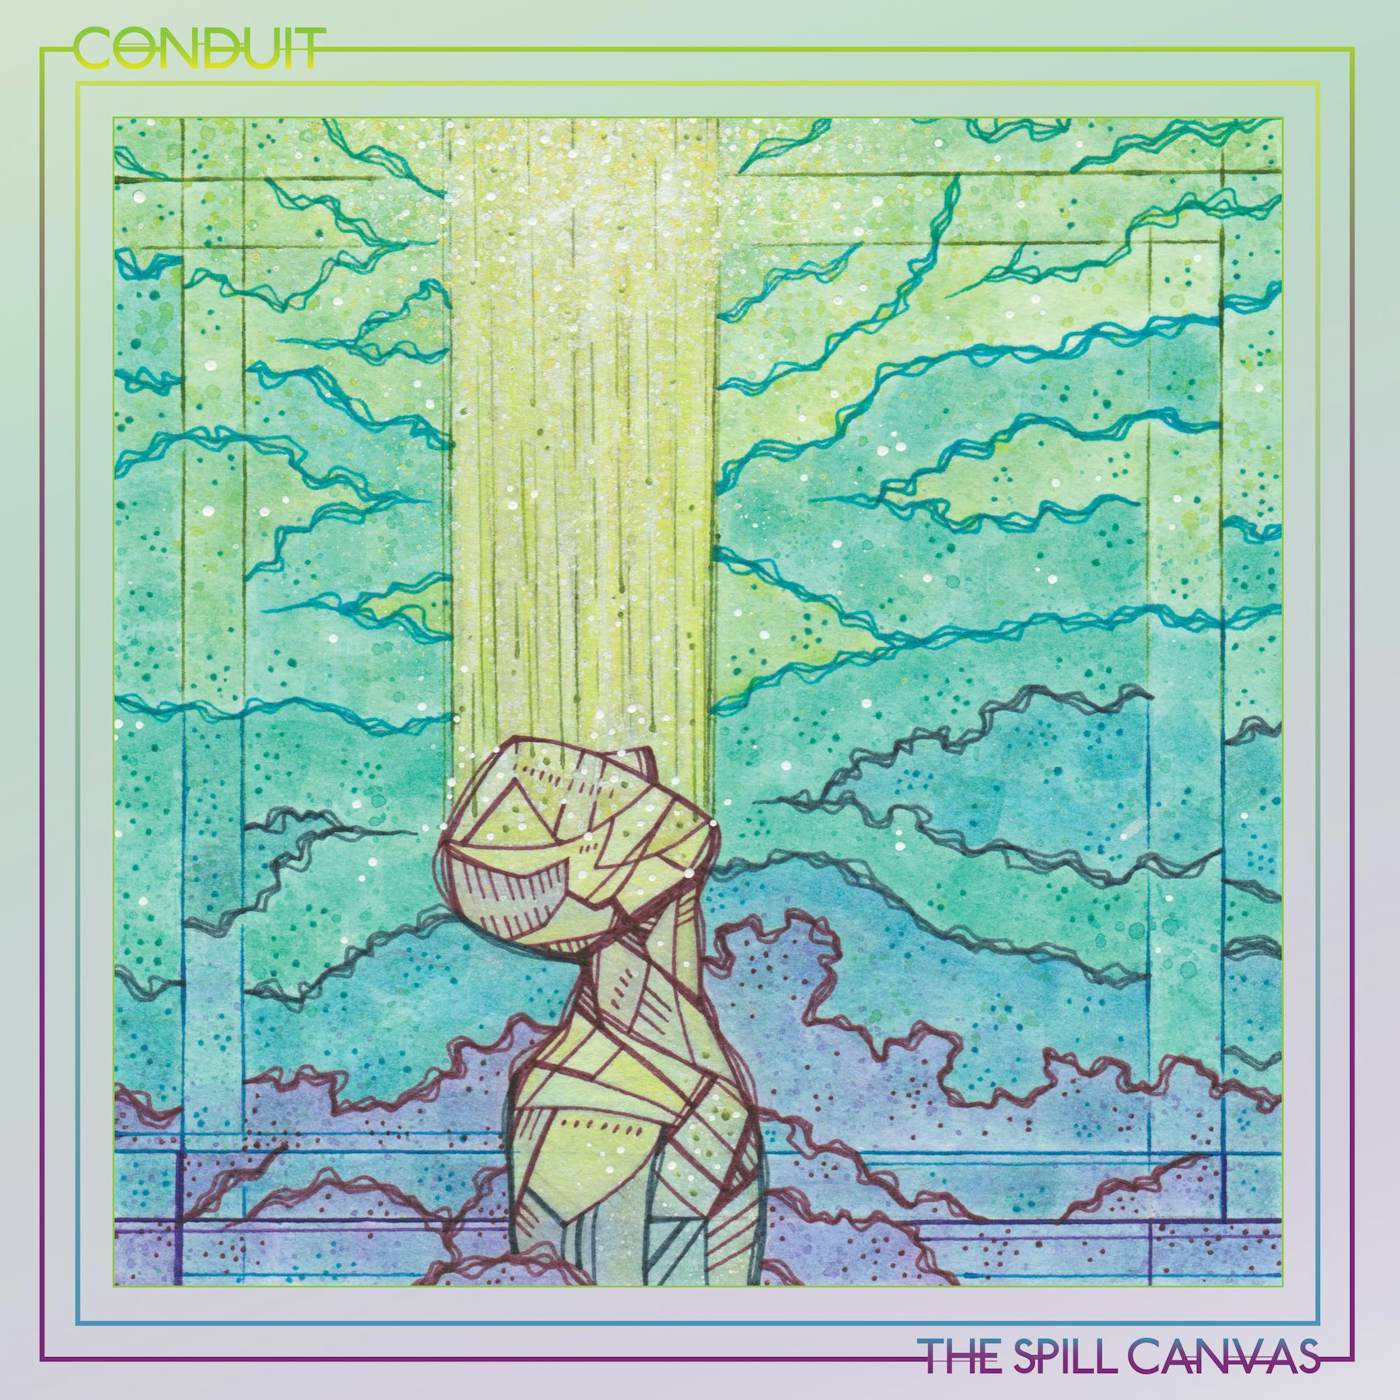 The Spill Canvas CONDUIT CD